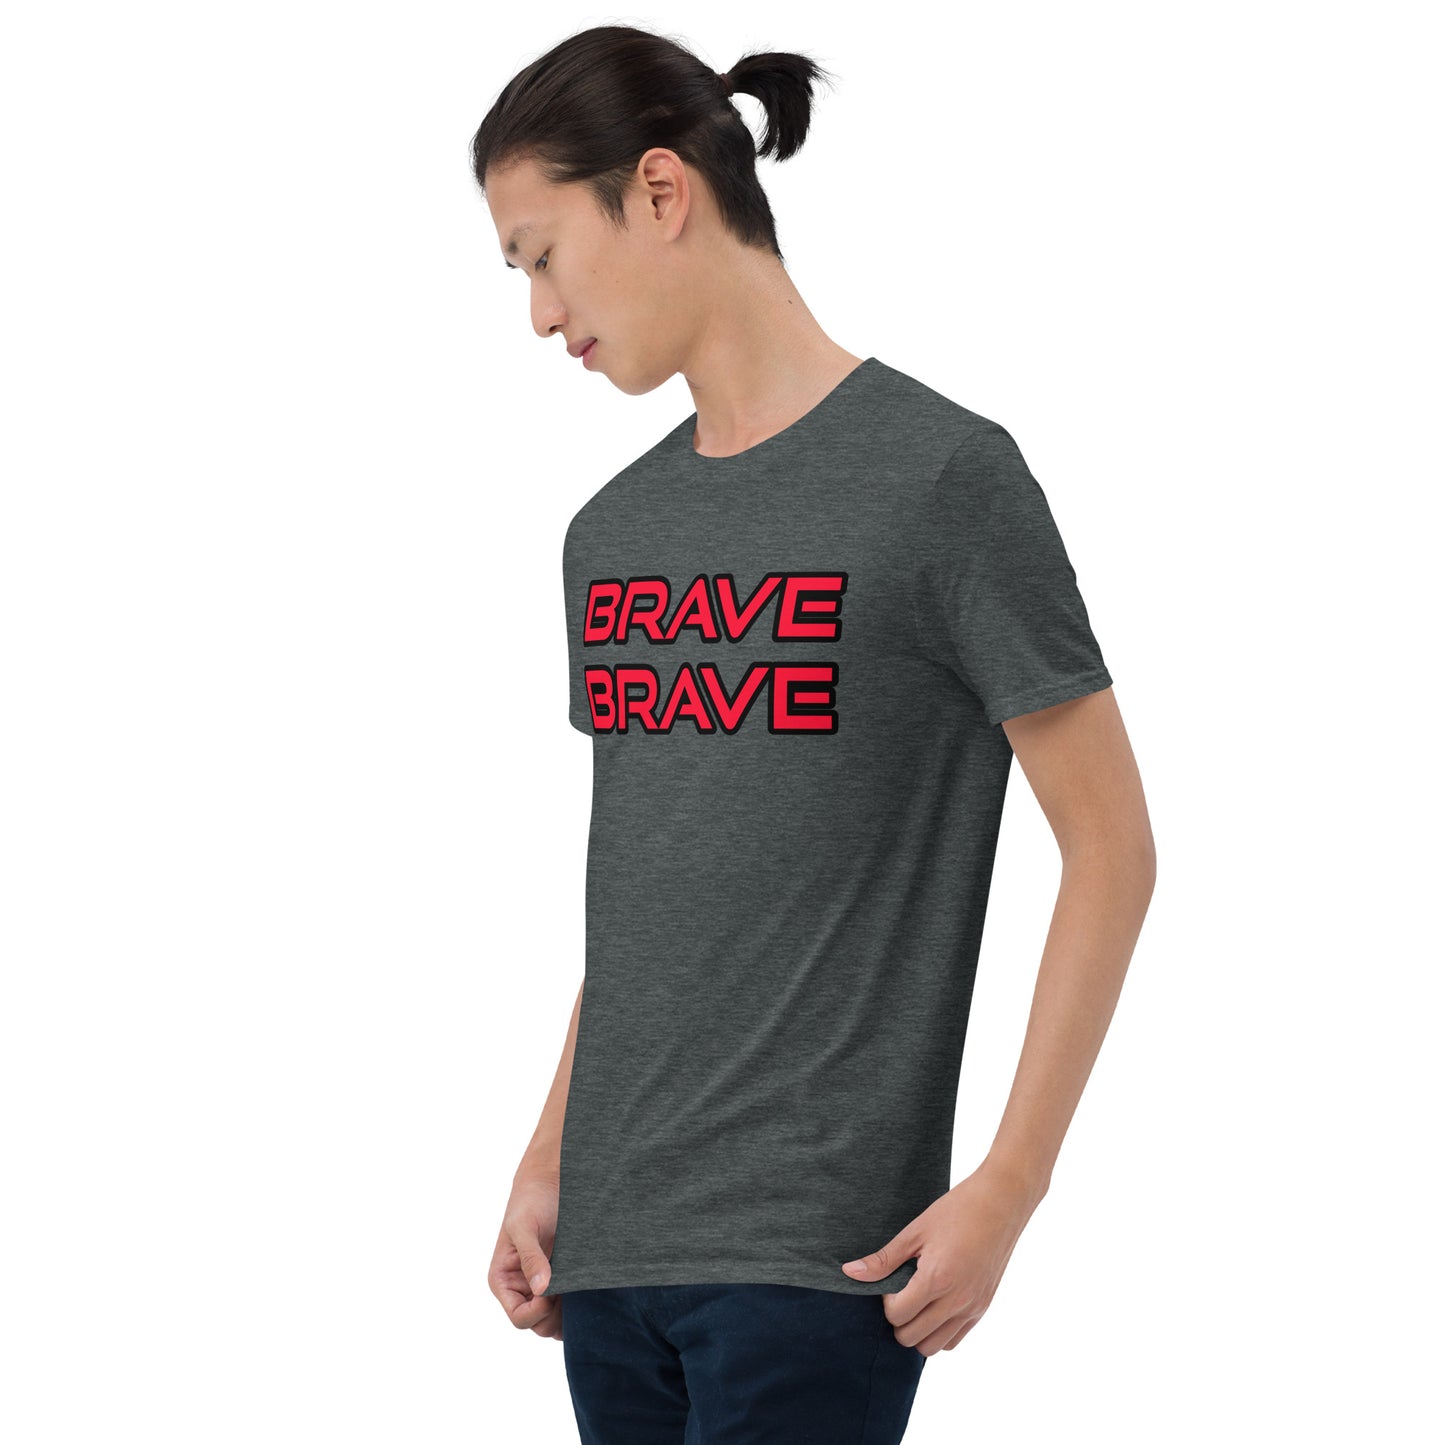 BRAVE BRAVE- Short-Sleeve Unisex T-Shirt